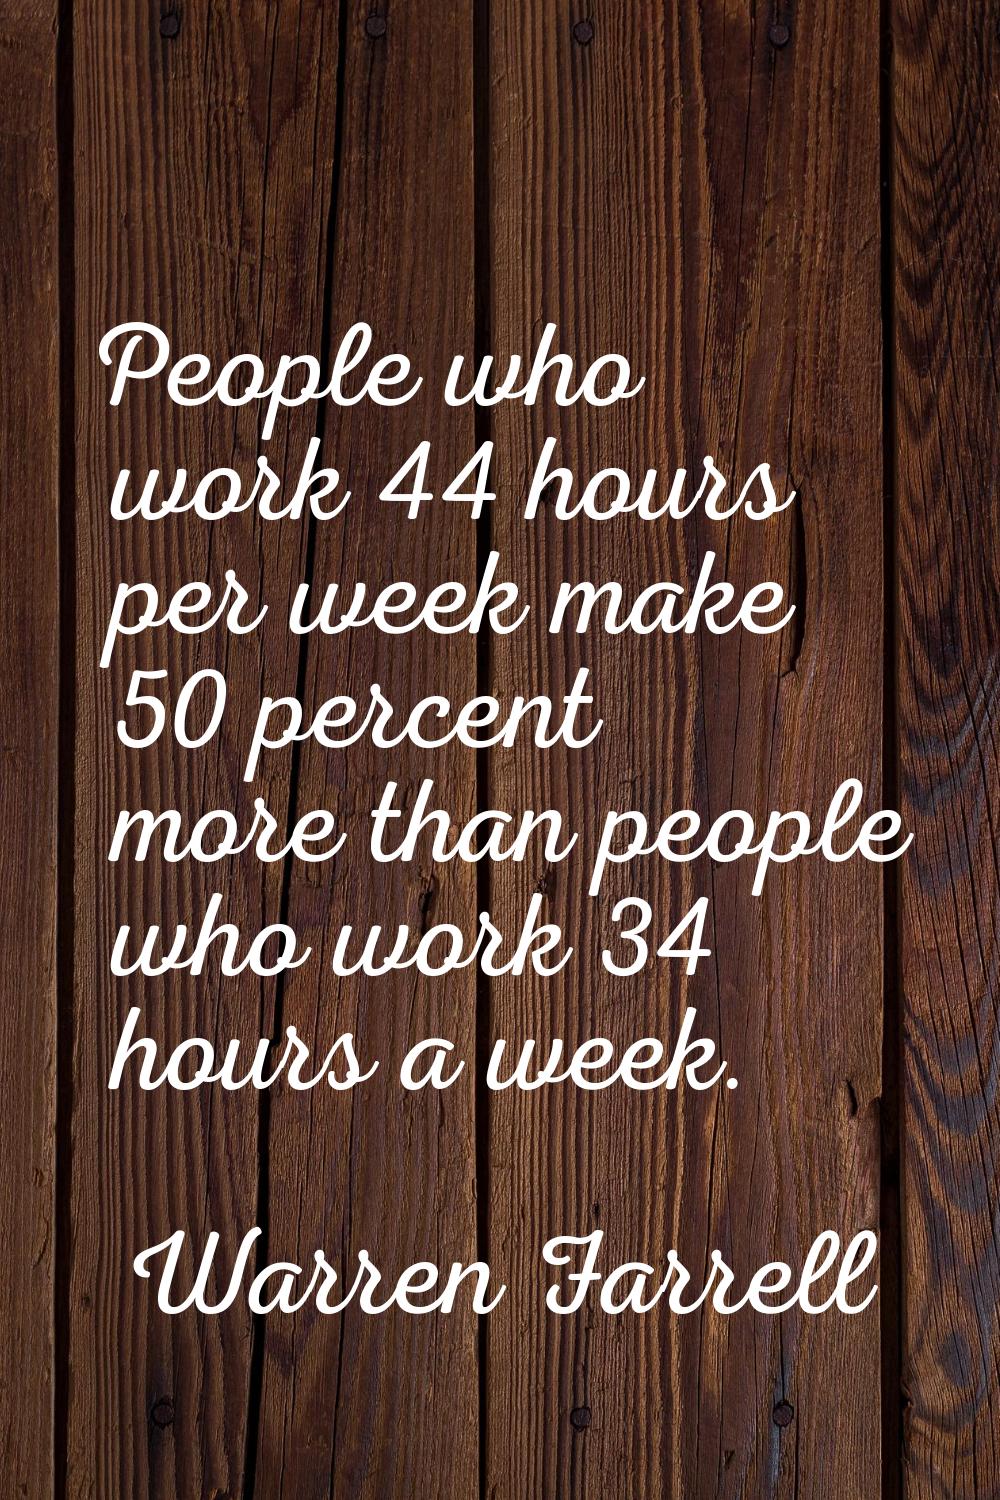 People who work 44 hours per week make 50 percent more than people who work 34 hours a week.